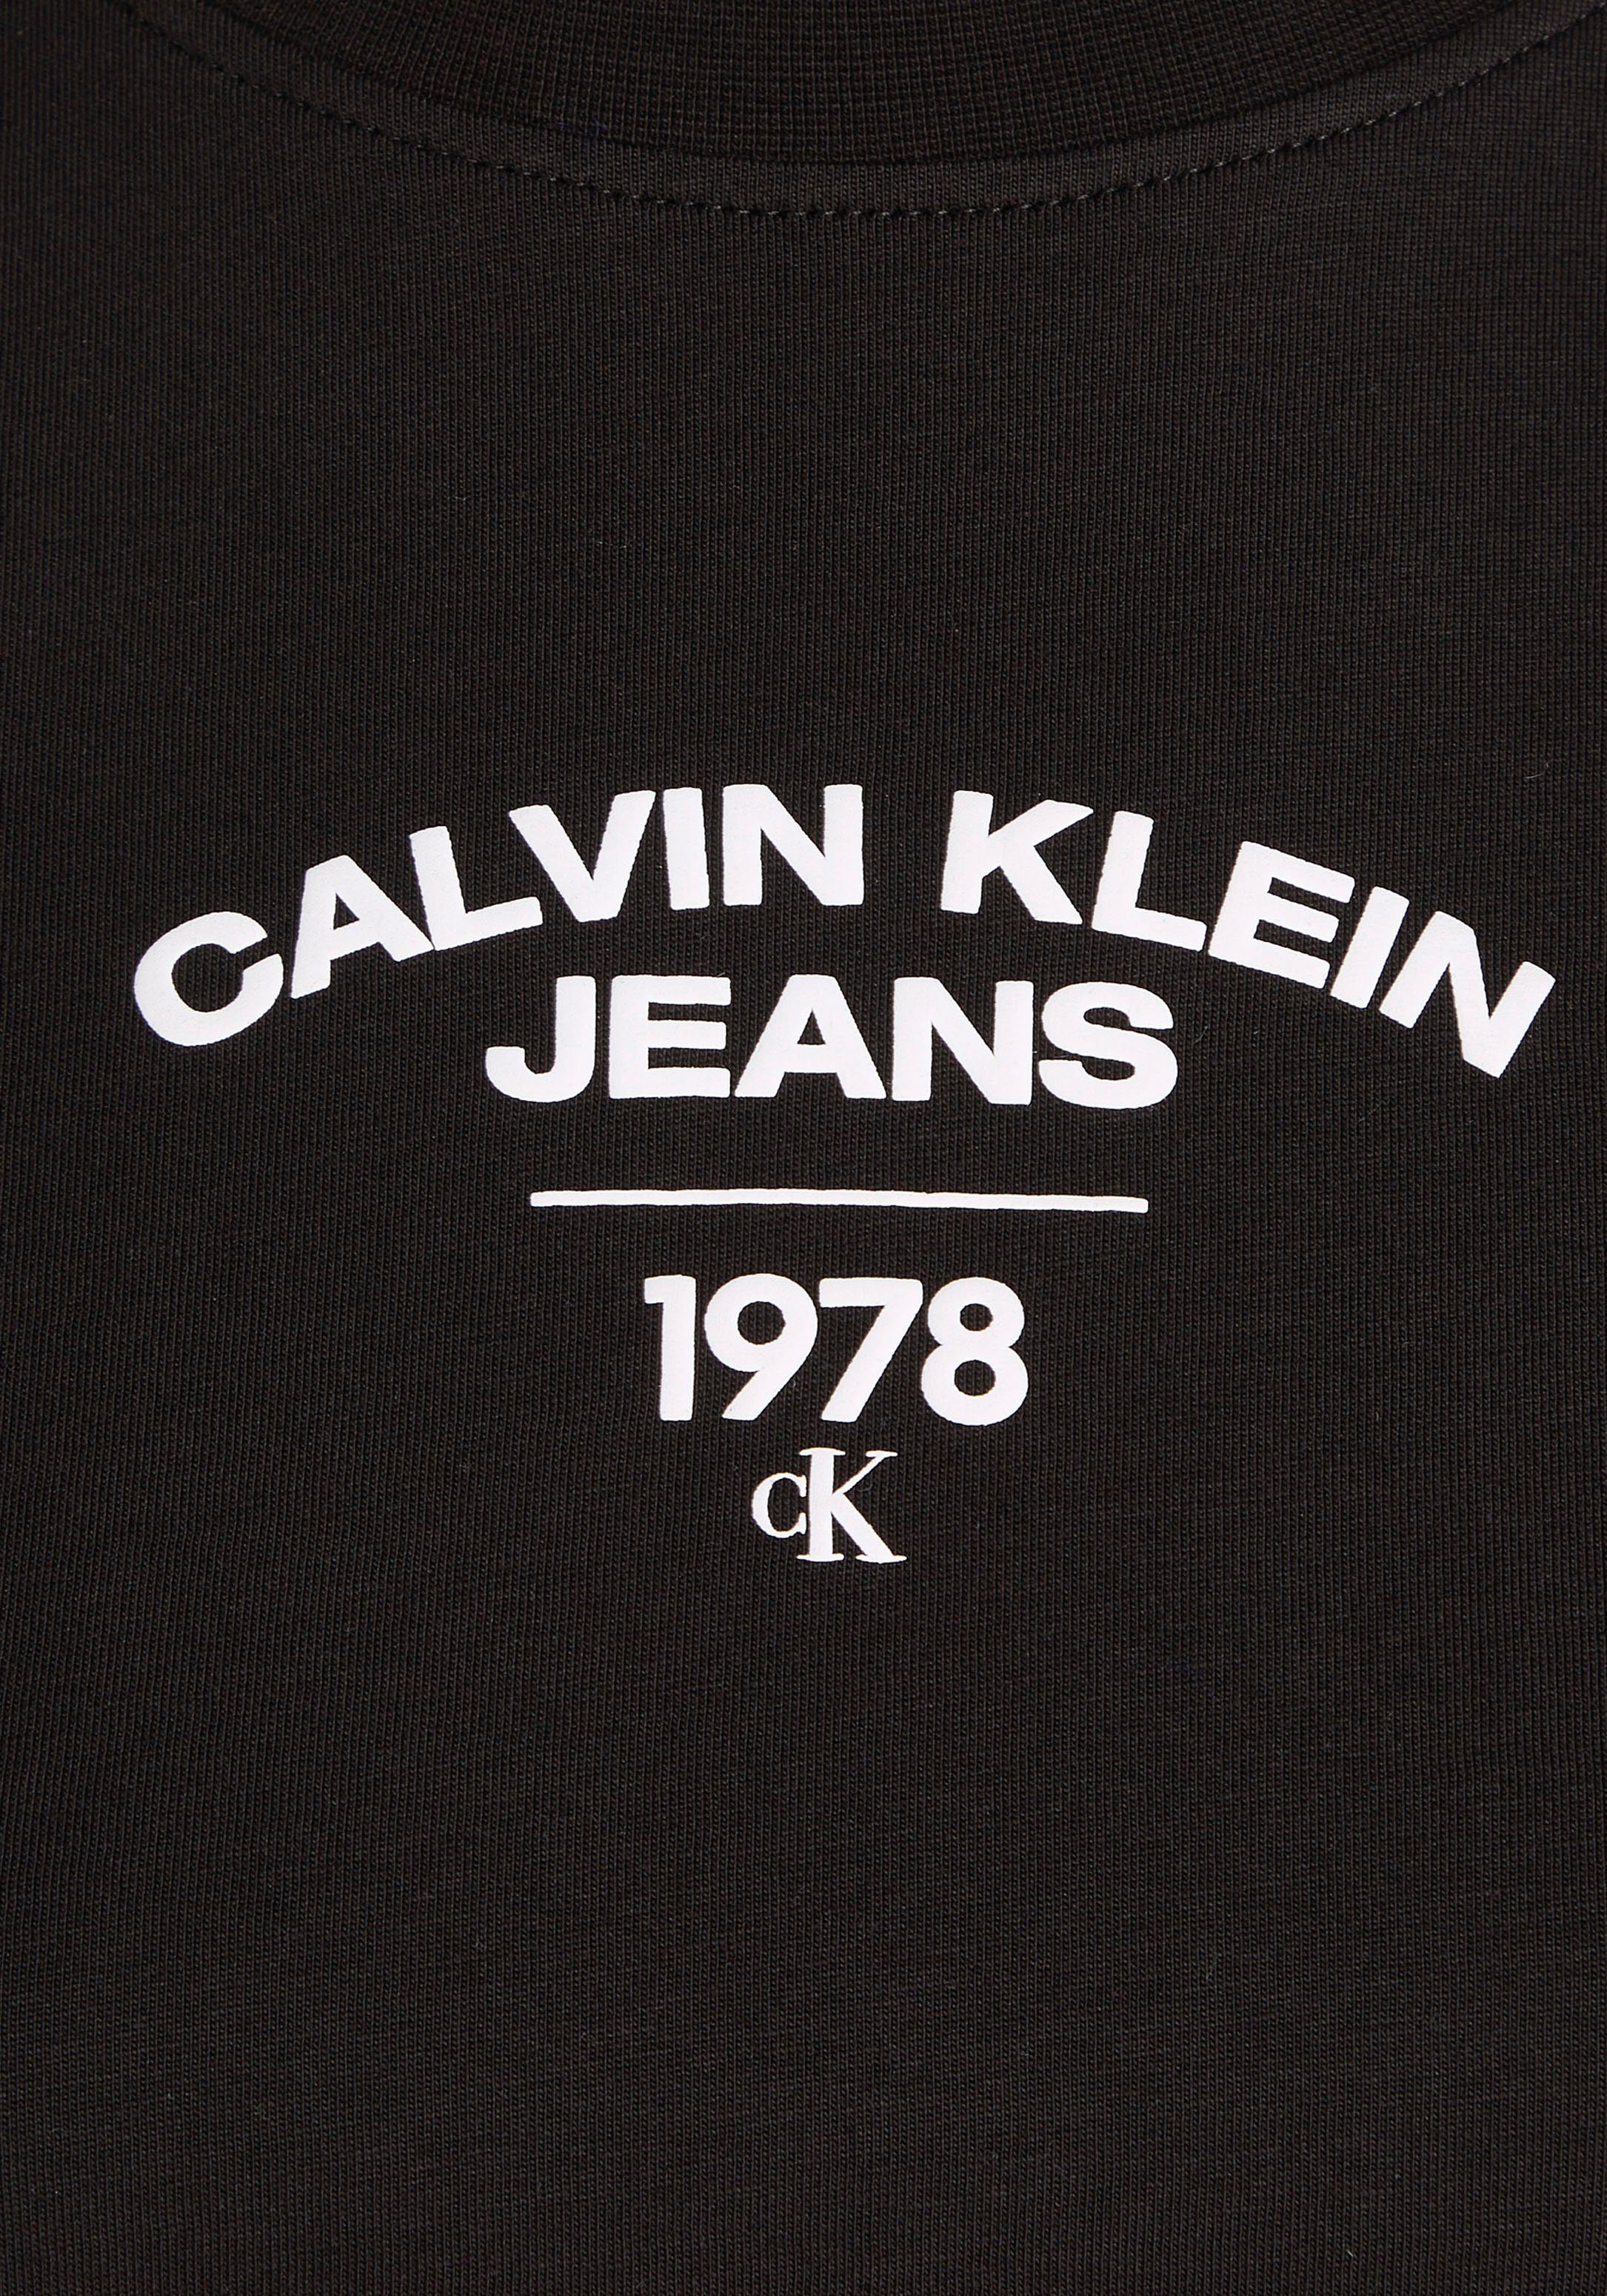 Calvin Klein Jeans TEE Black Ck VARSITY BABY T-Shirt LOGO